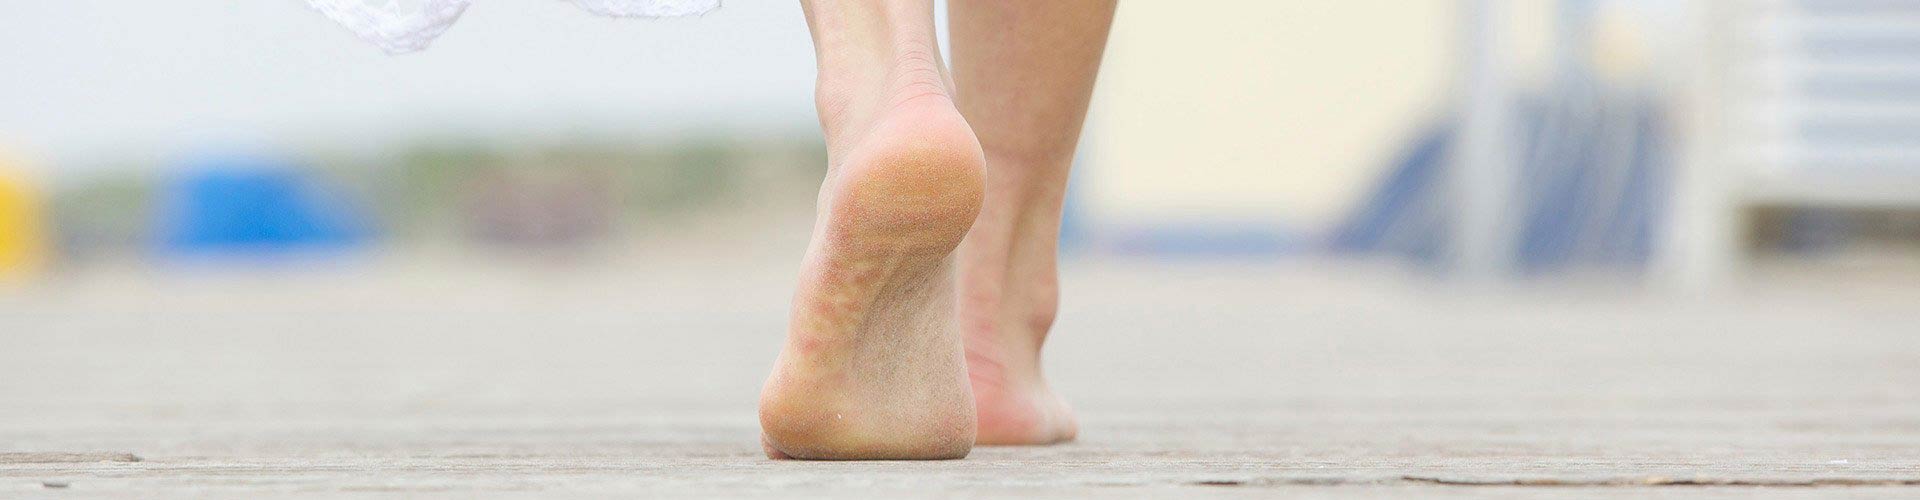 Closeup of Feet of Person Walking